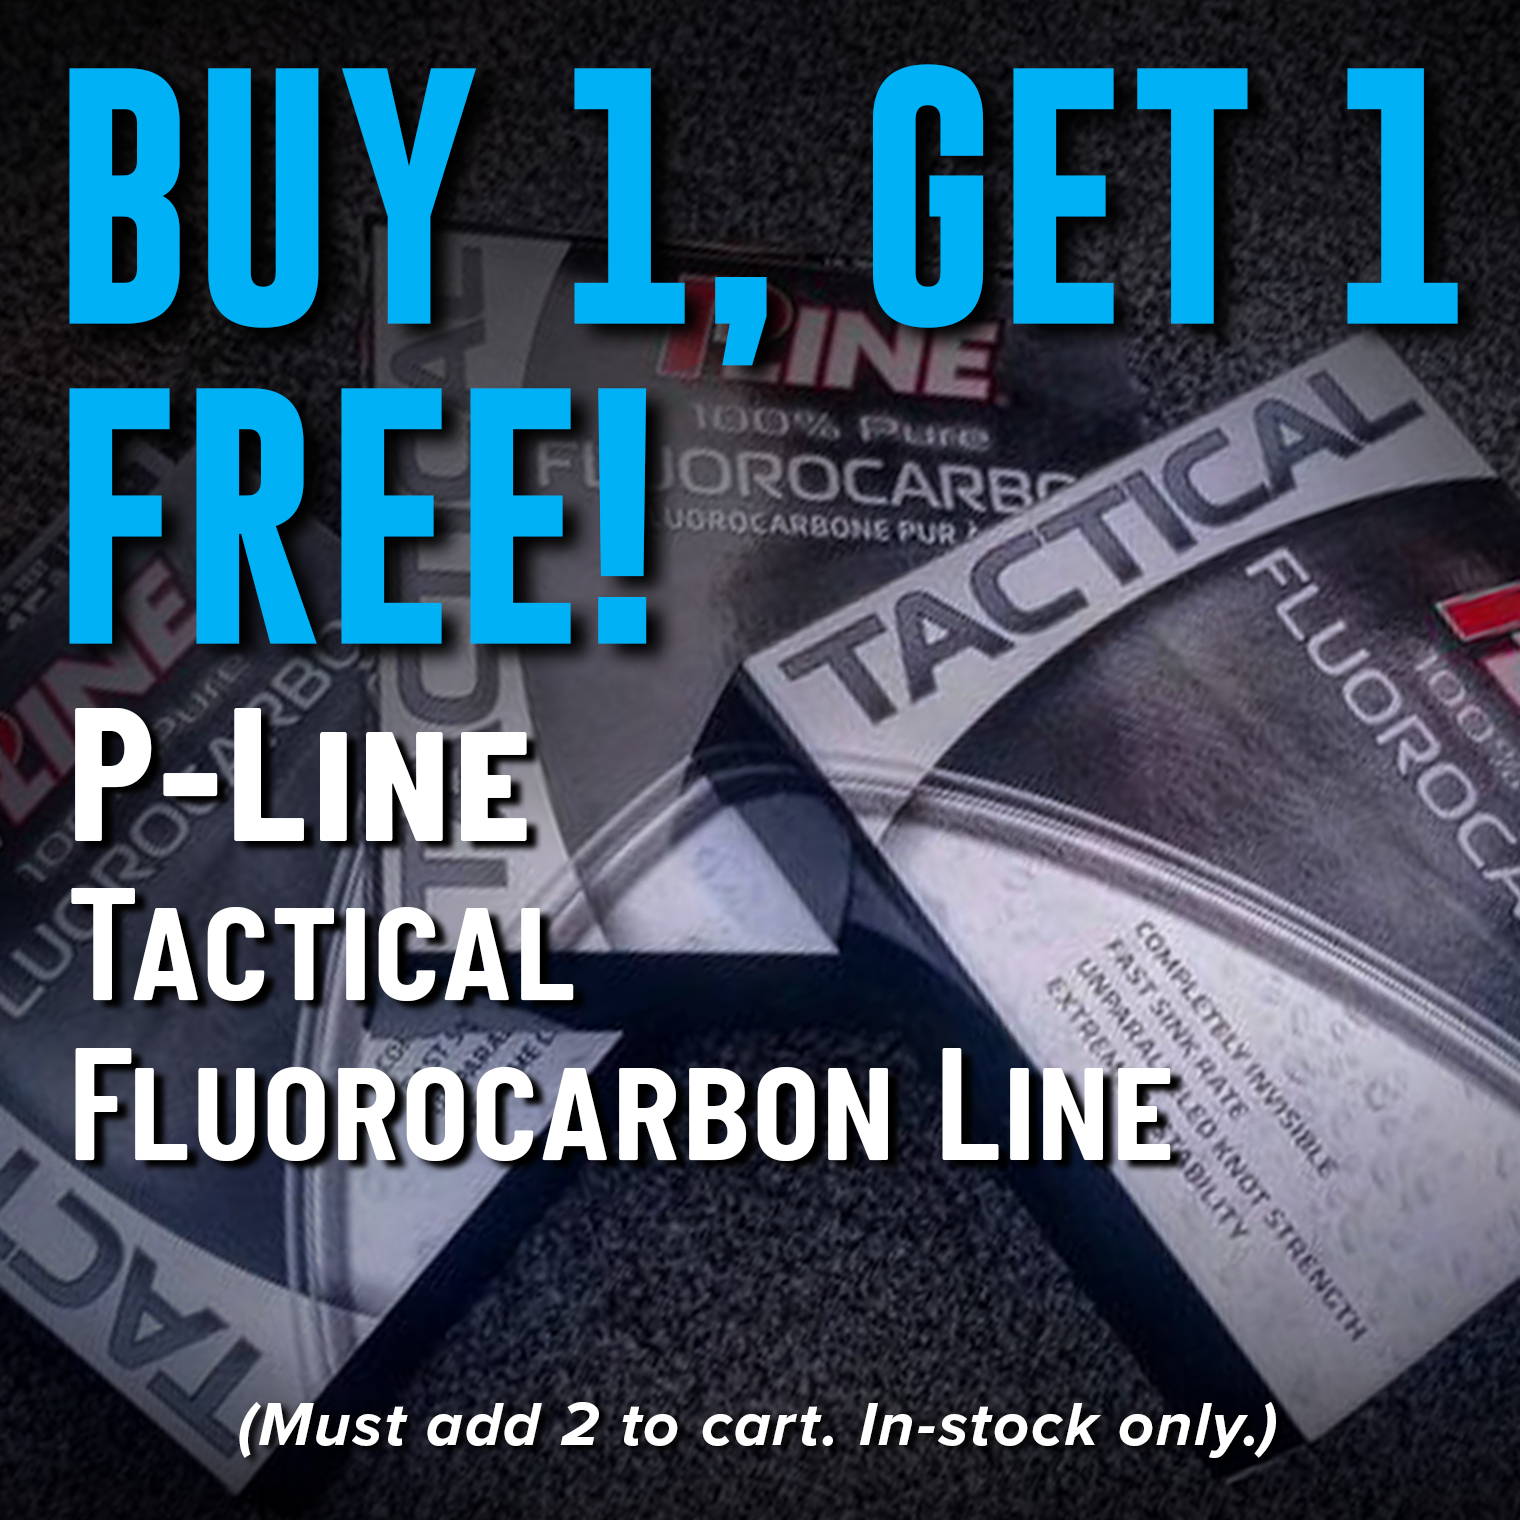 Buy 1, Get 1 Free! P-Line Tactical Fluorocarbon Line